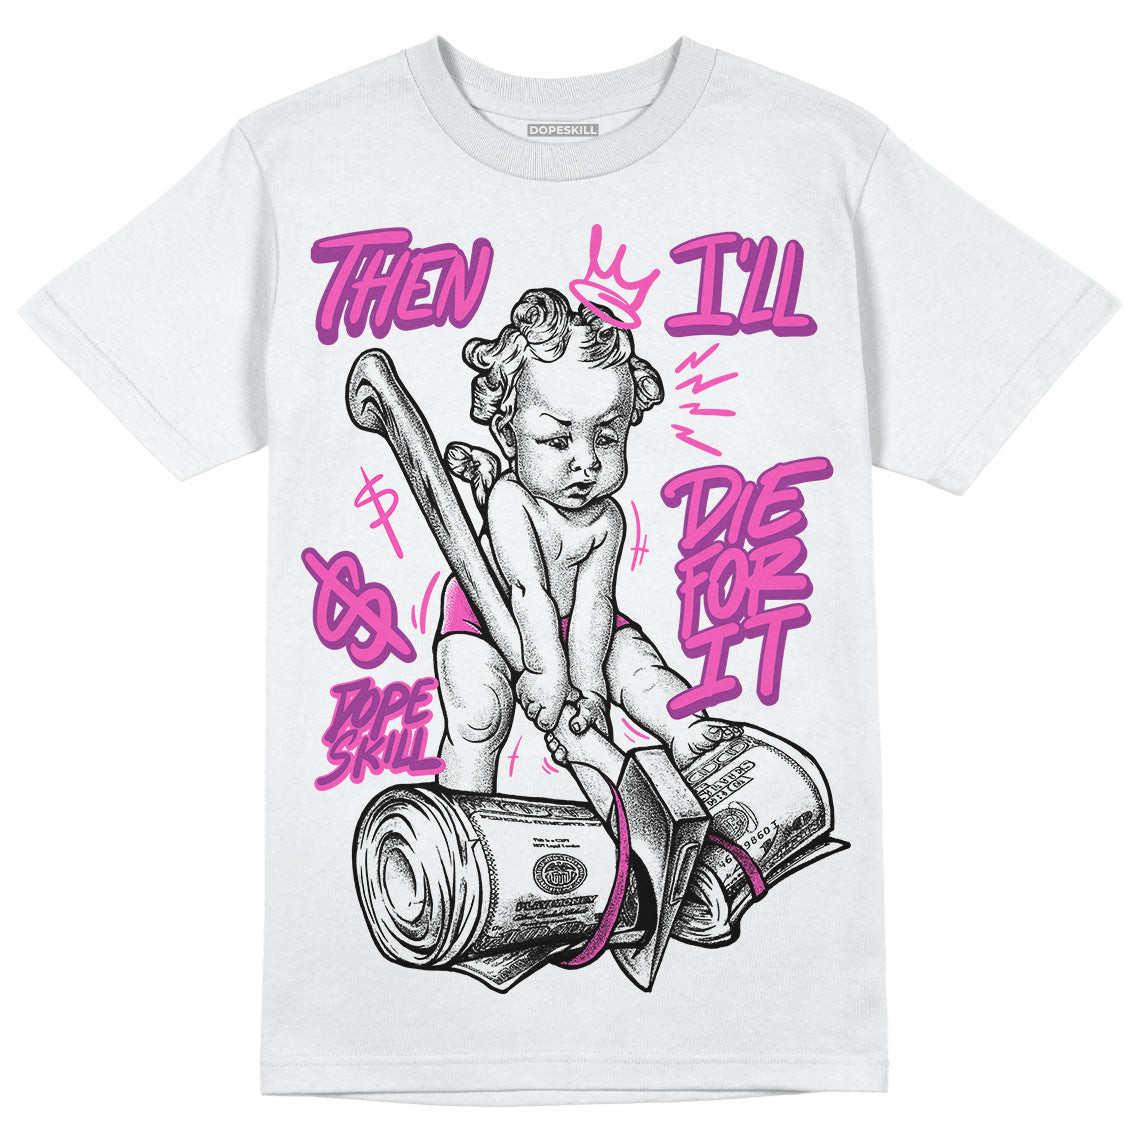 Jordan 4 GS “Hyper Violet” DopeSkill T-Shirt Then I'll Die For It Graphic Streetwear - White